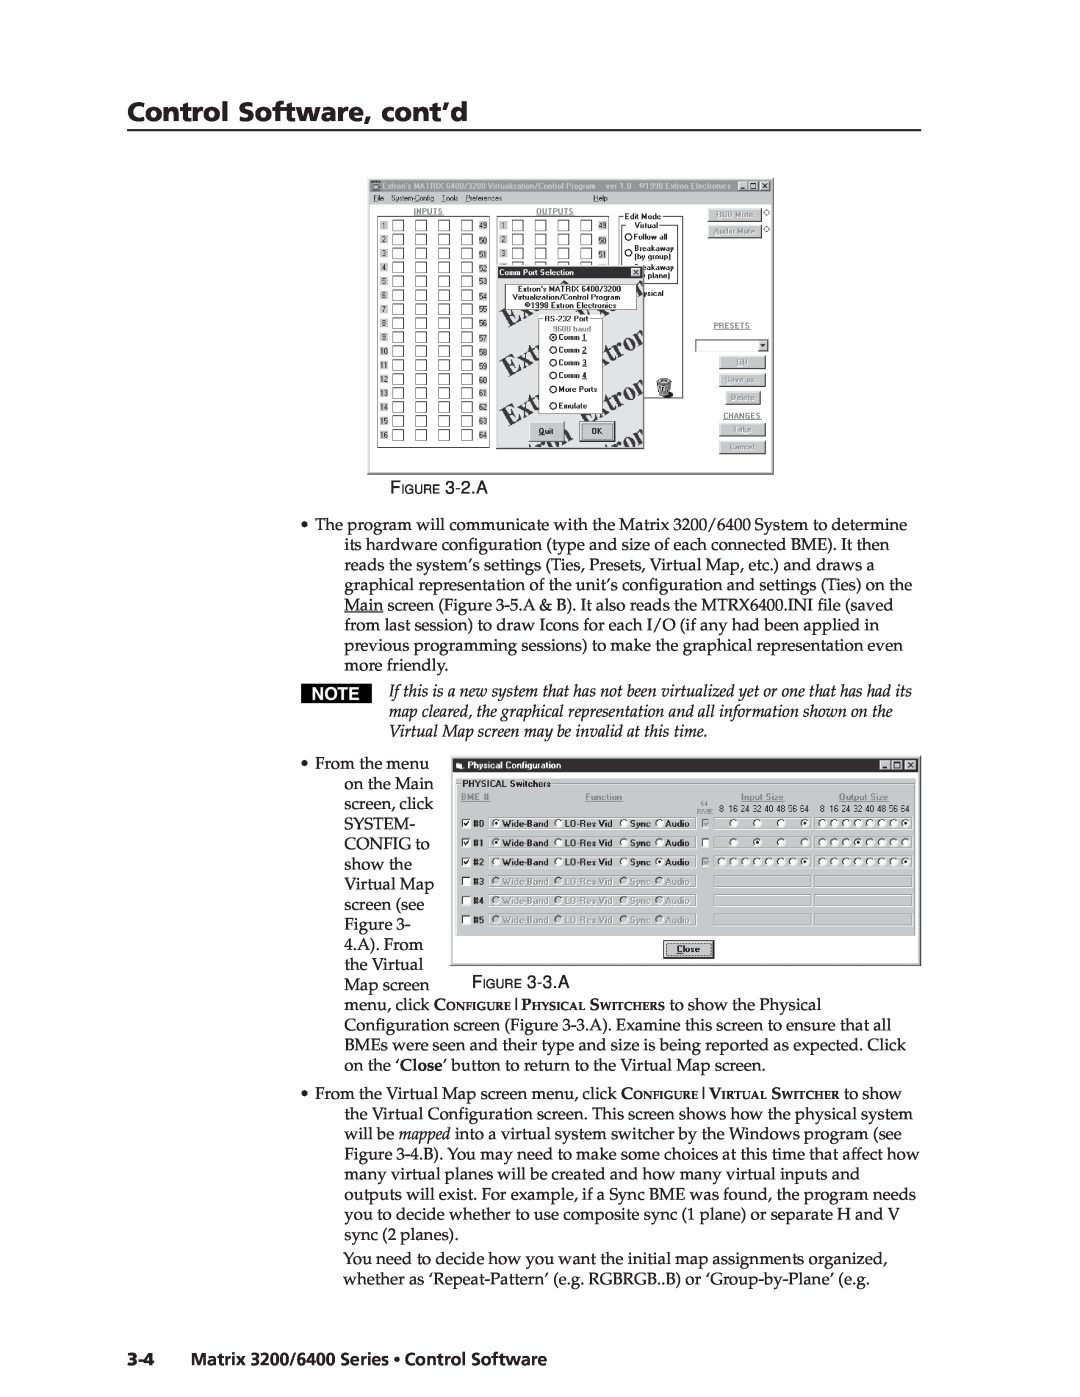 Extron electronic 3200s manual Control Software, cont’d, Matrix 3200/6400 Series Control Software 